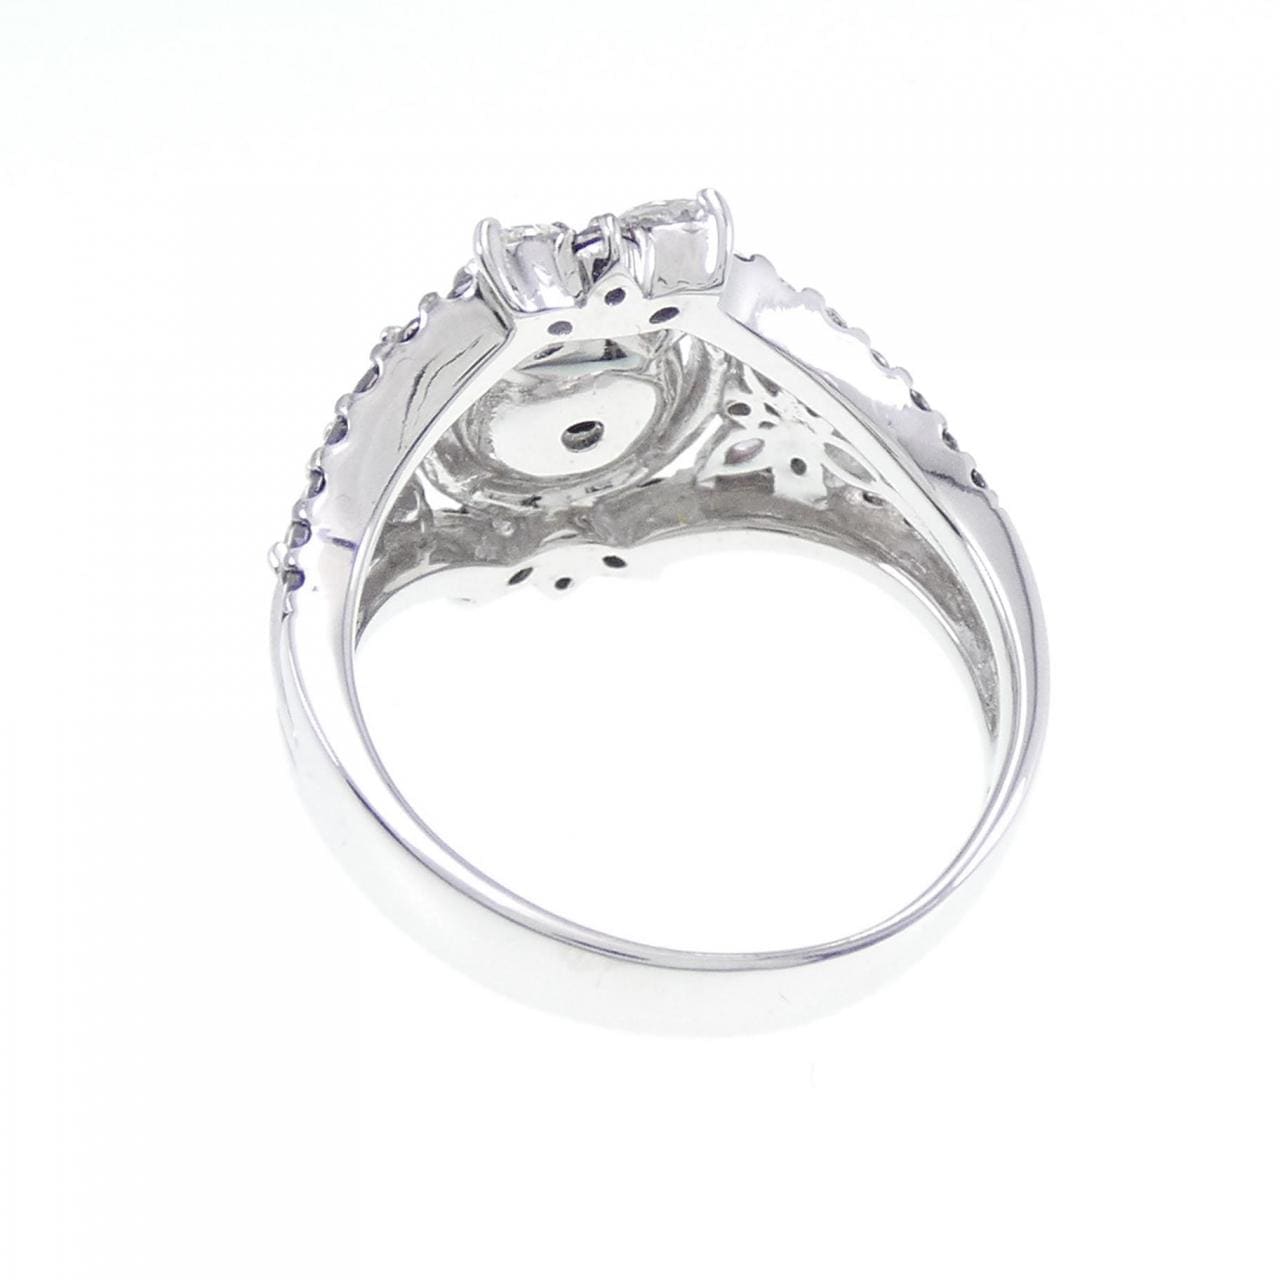 K18WG/K18BG Diamond ring 3.24CT